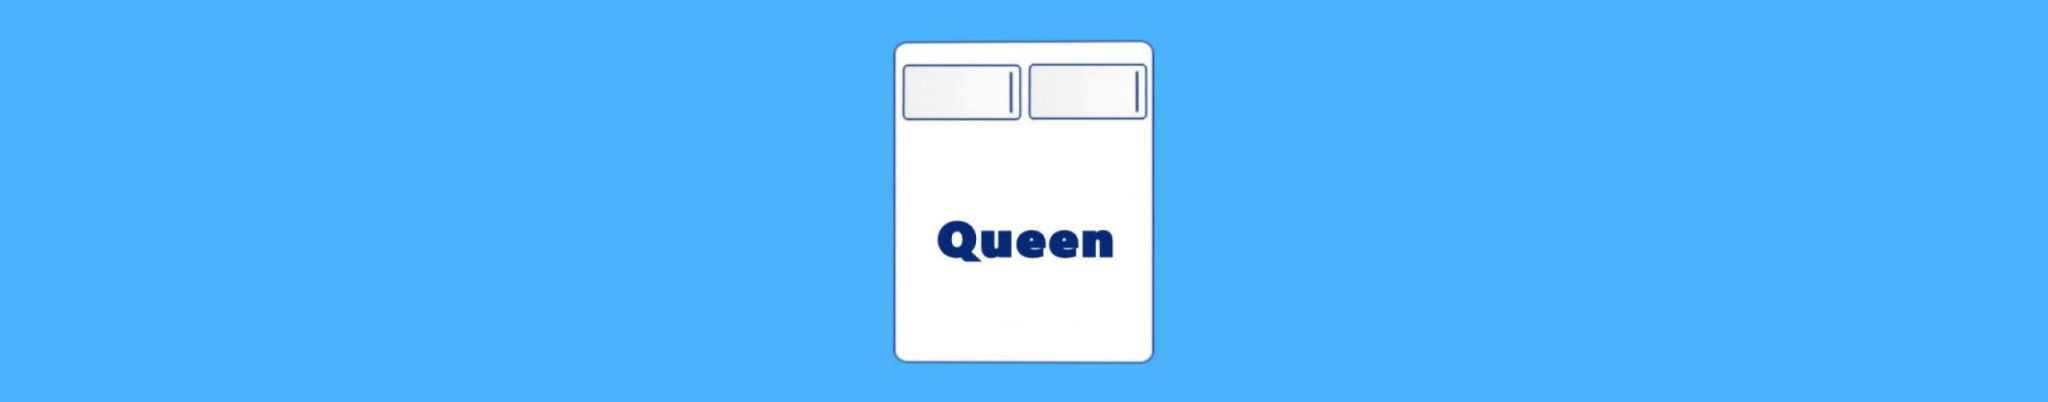 queen size hospital bed mattress size